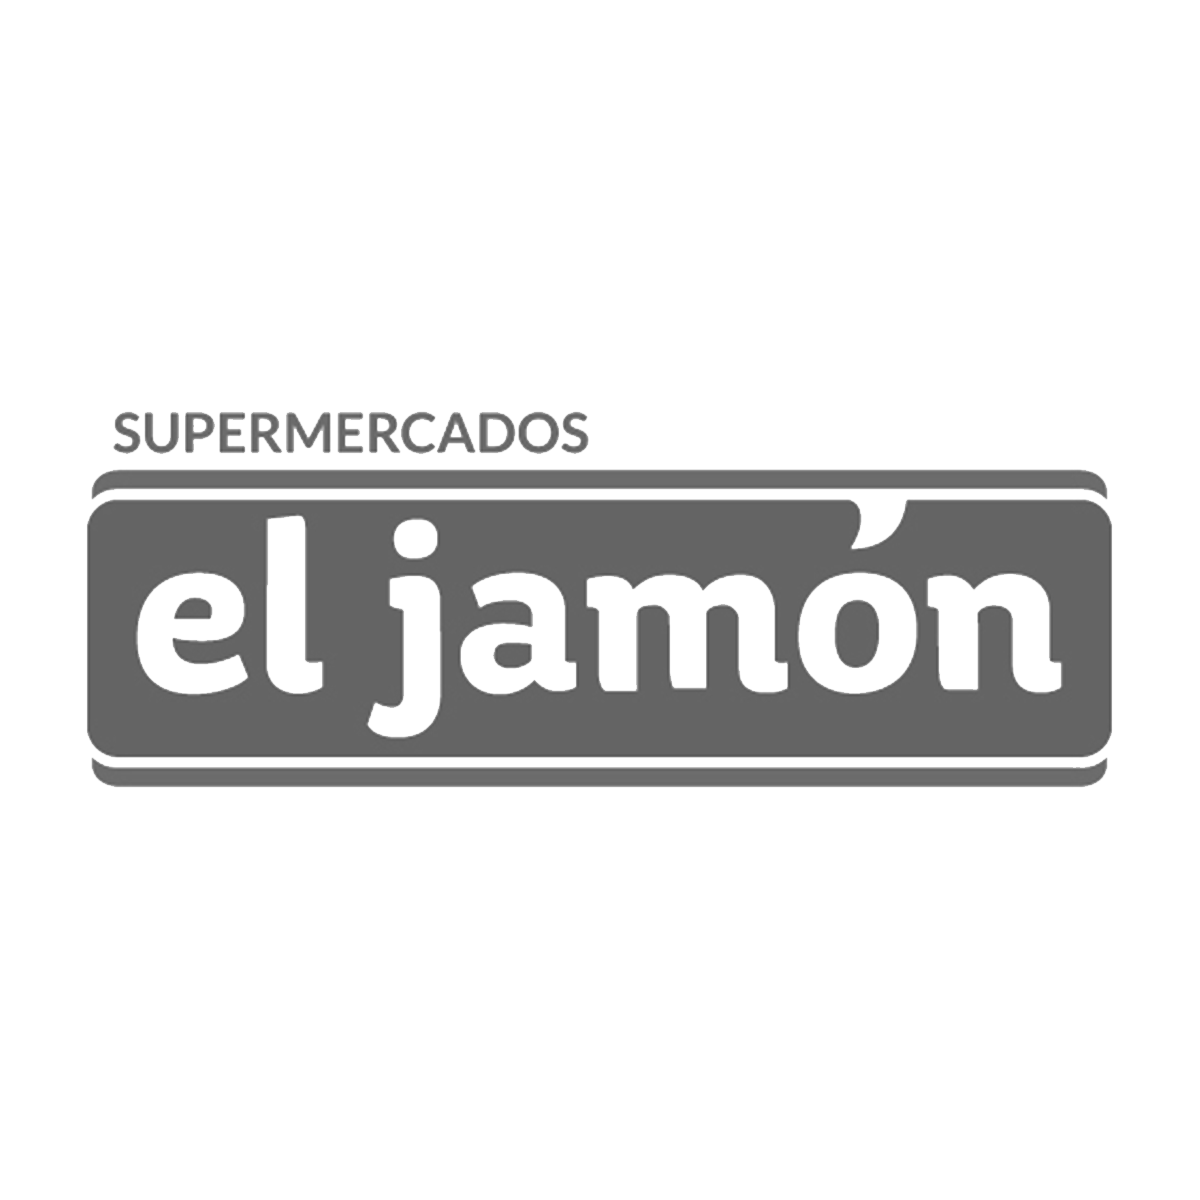 logo el jamon